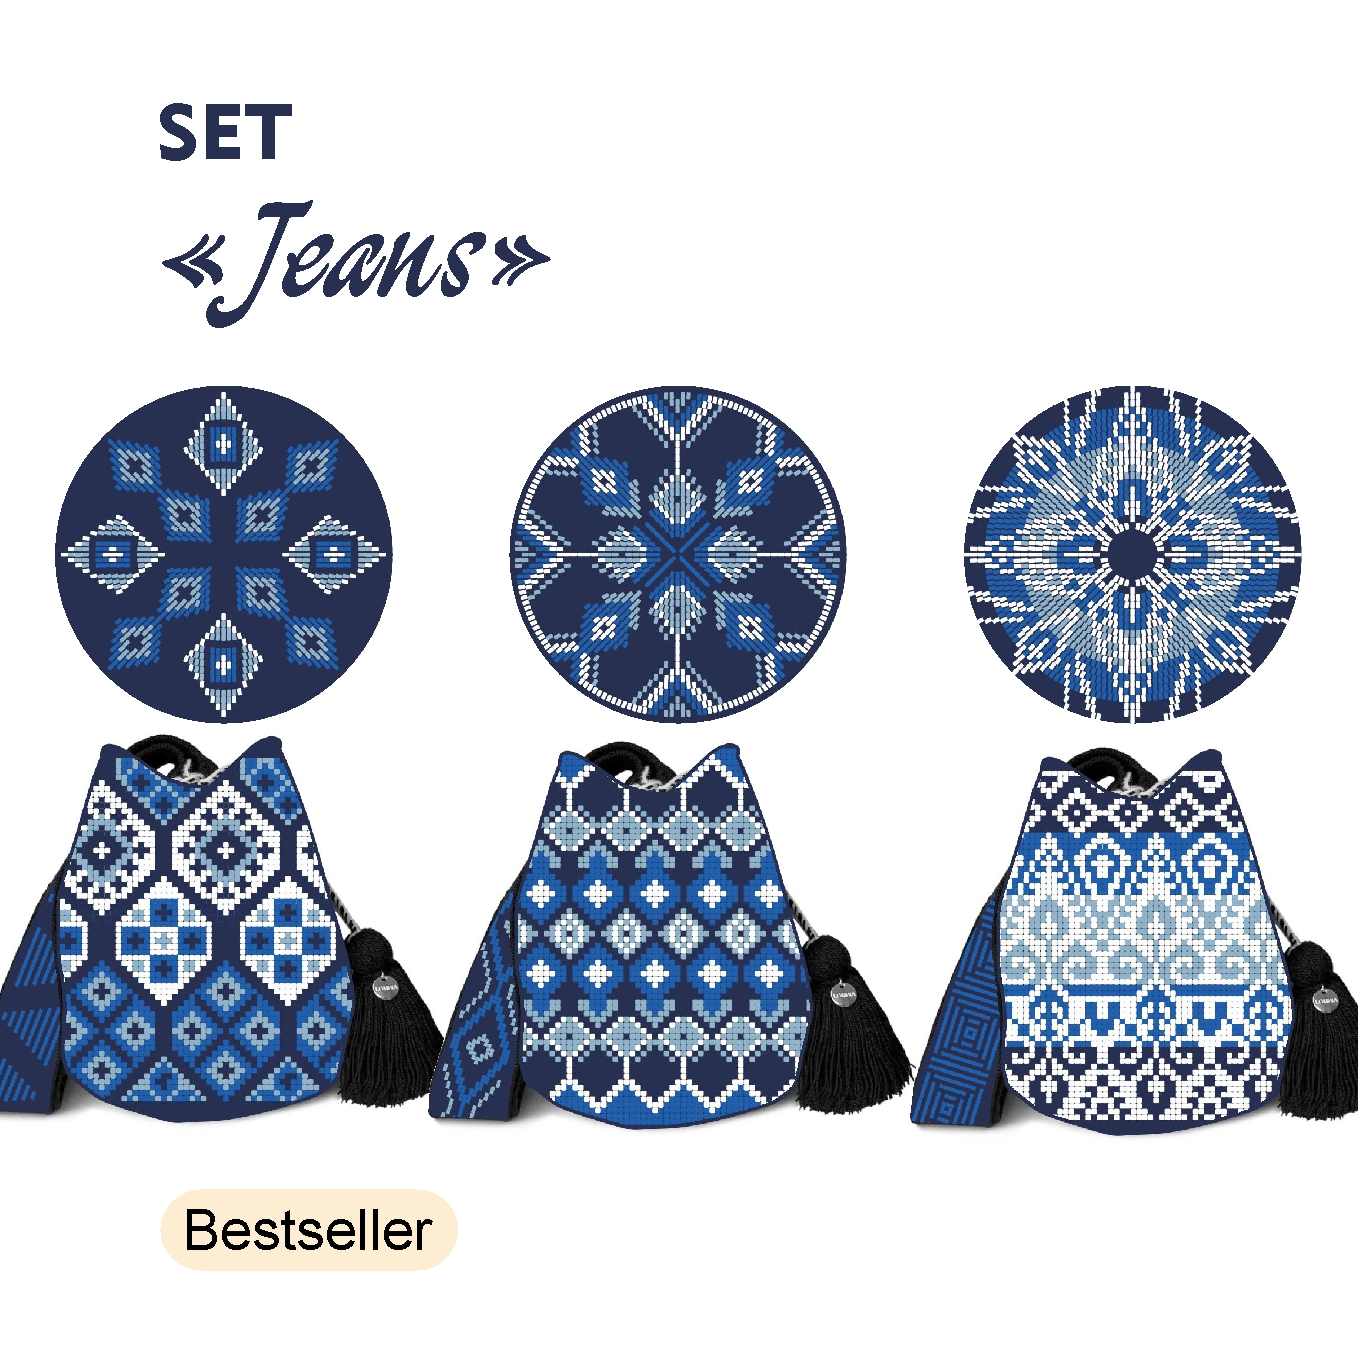 Wayuu mochila bag with tapestry technique, geometric motives, Crochet  pattern, colorful, PDF-file, DIY